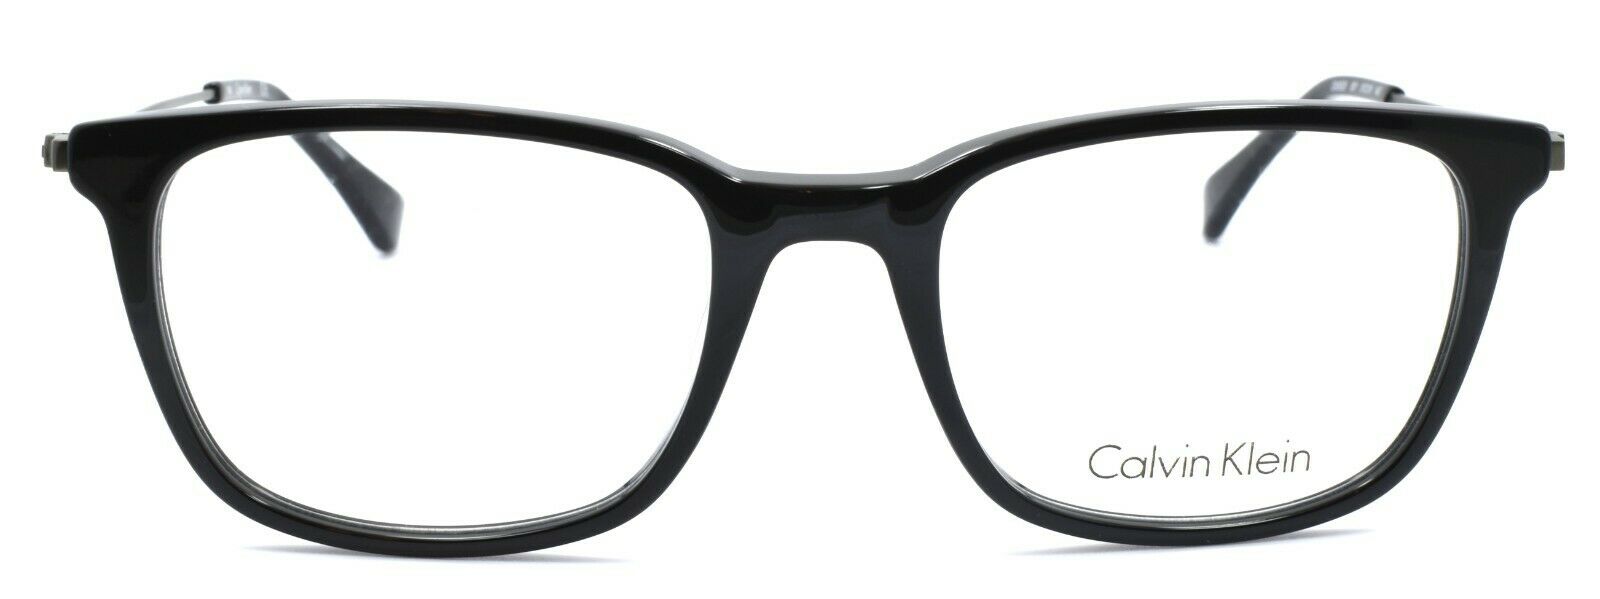 2-Calvin Klein CK5929 001 Eyeglasses Frames 51-19-140 Black-612608928077-IKSpecs